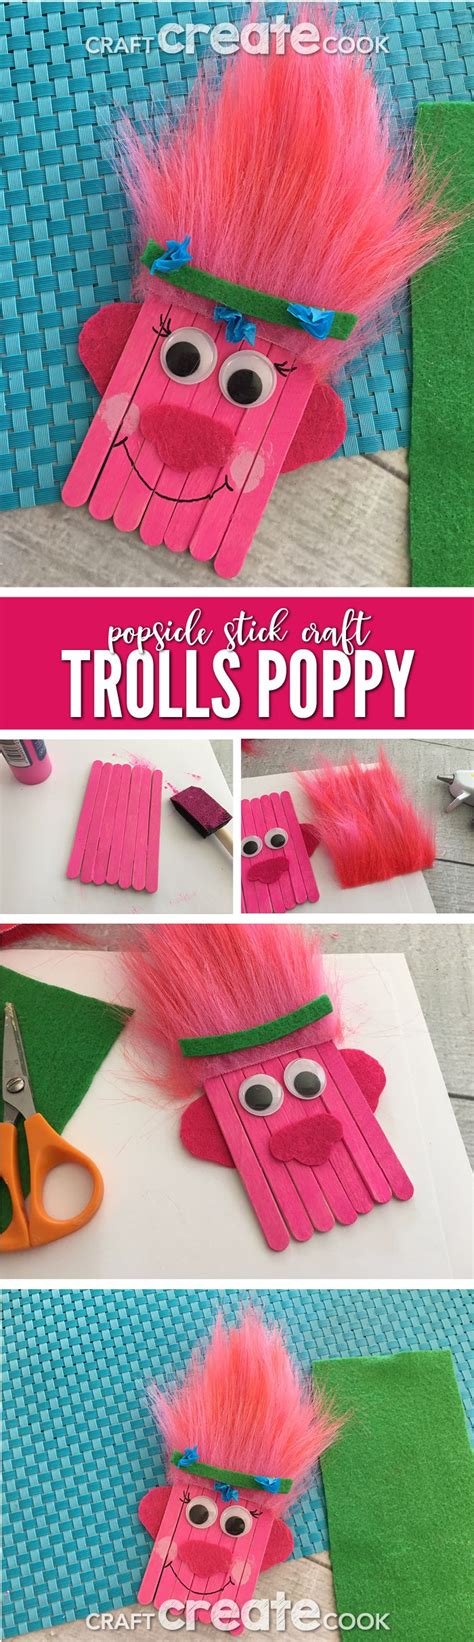 Trolls Poppy Popsicle Stick Craft For Kids Via Craftcreatcook1 Daycare